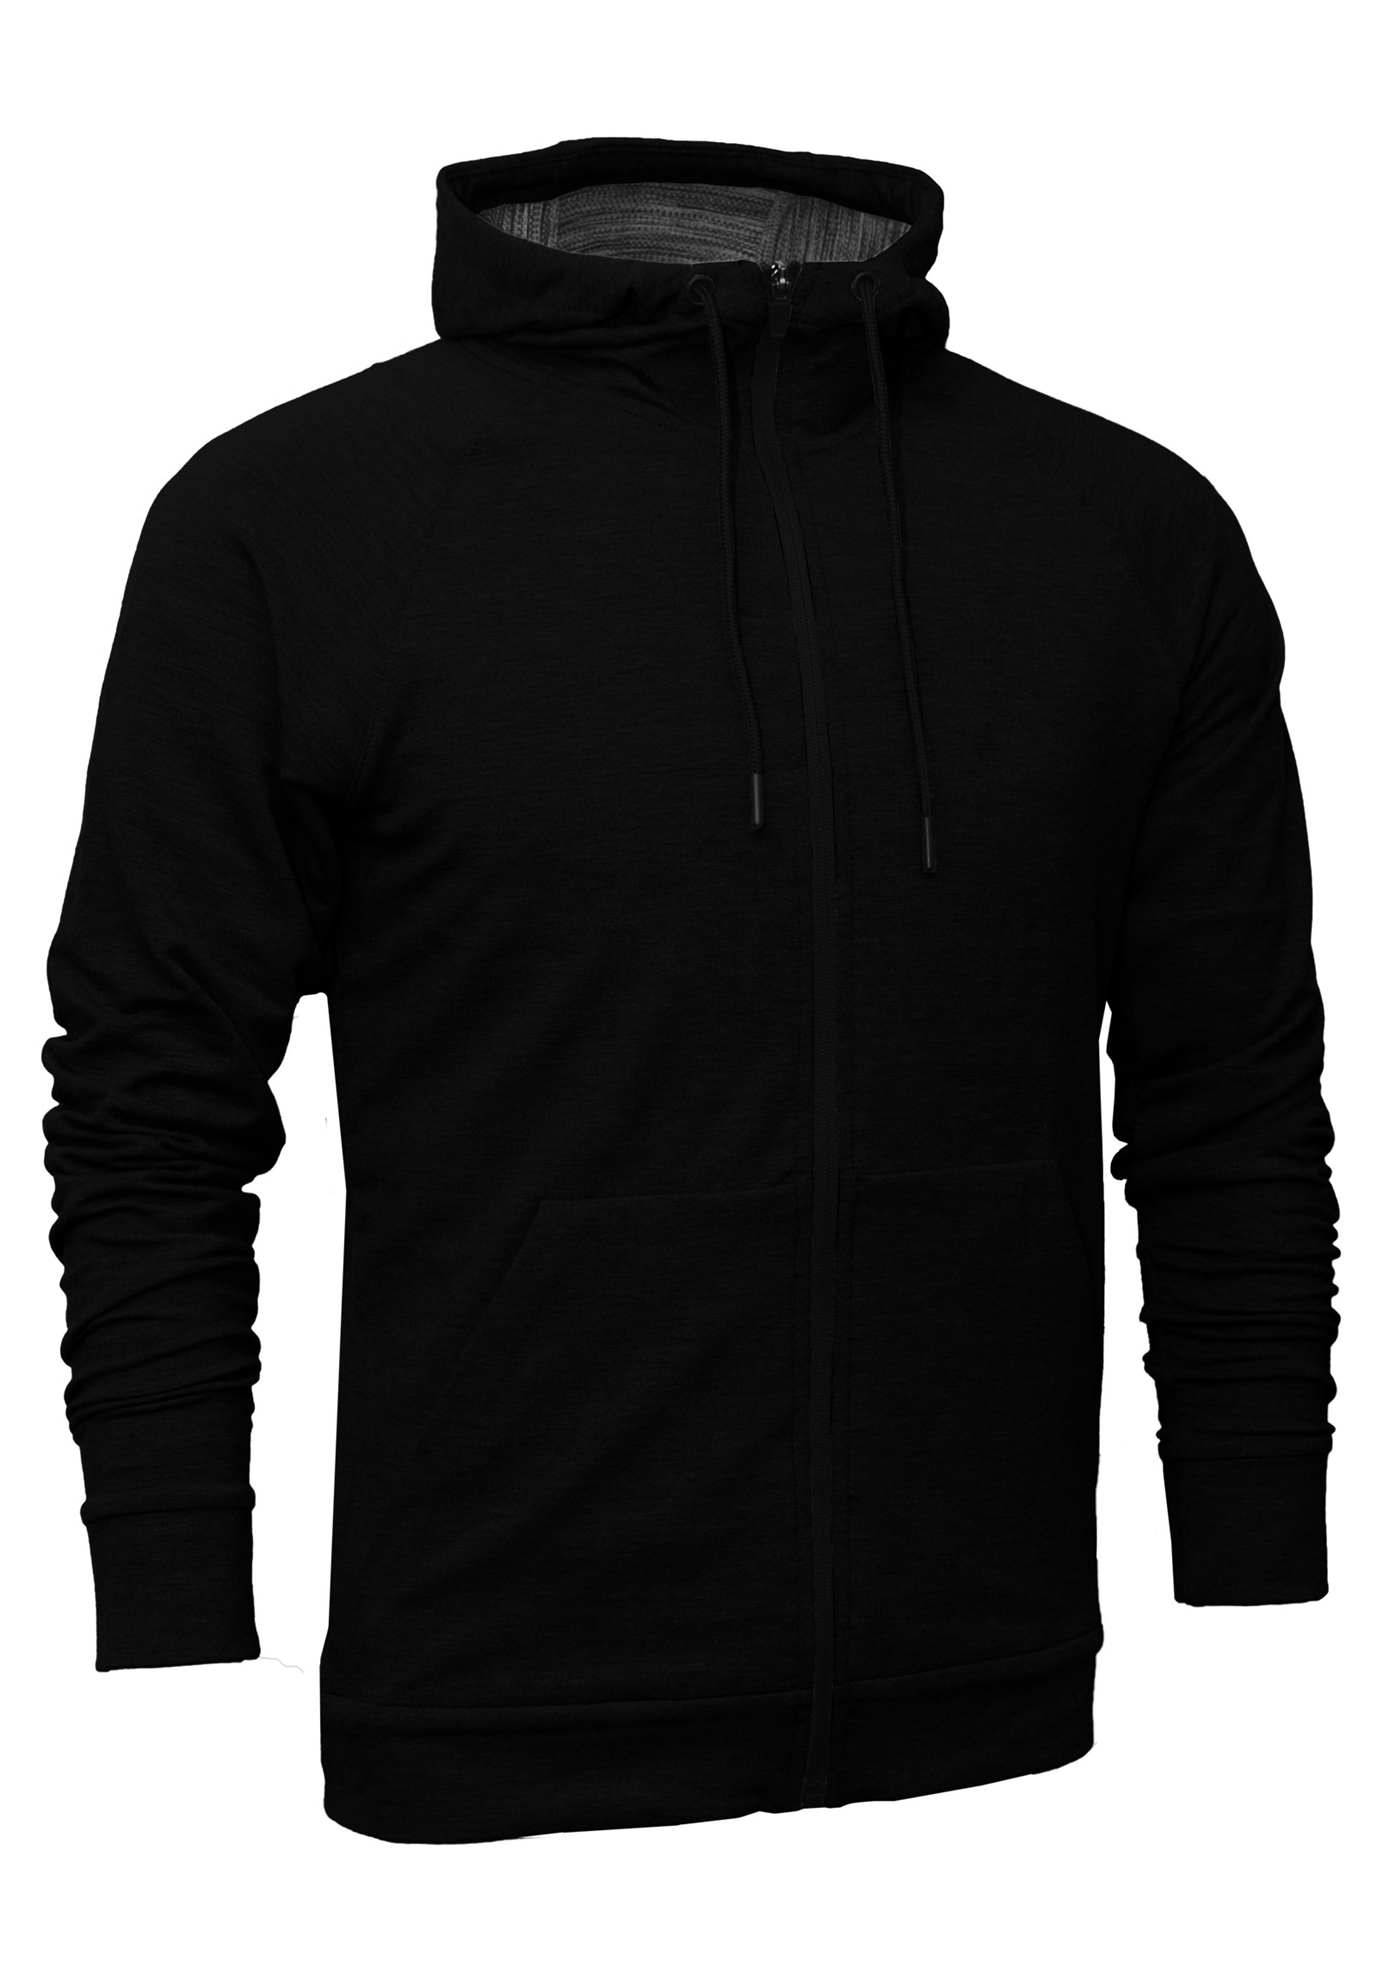 BAW Athletic Wear F360 - Adult Tri-Blend Full Zip Jacket